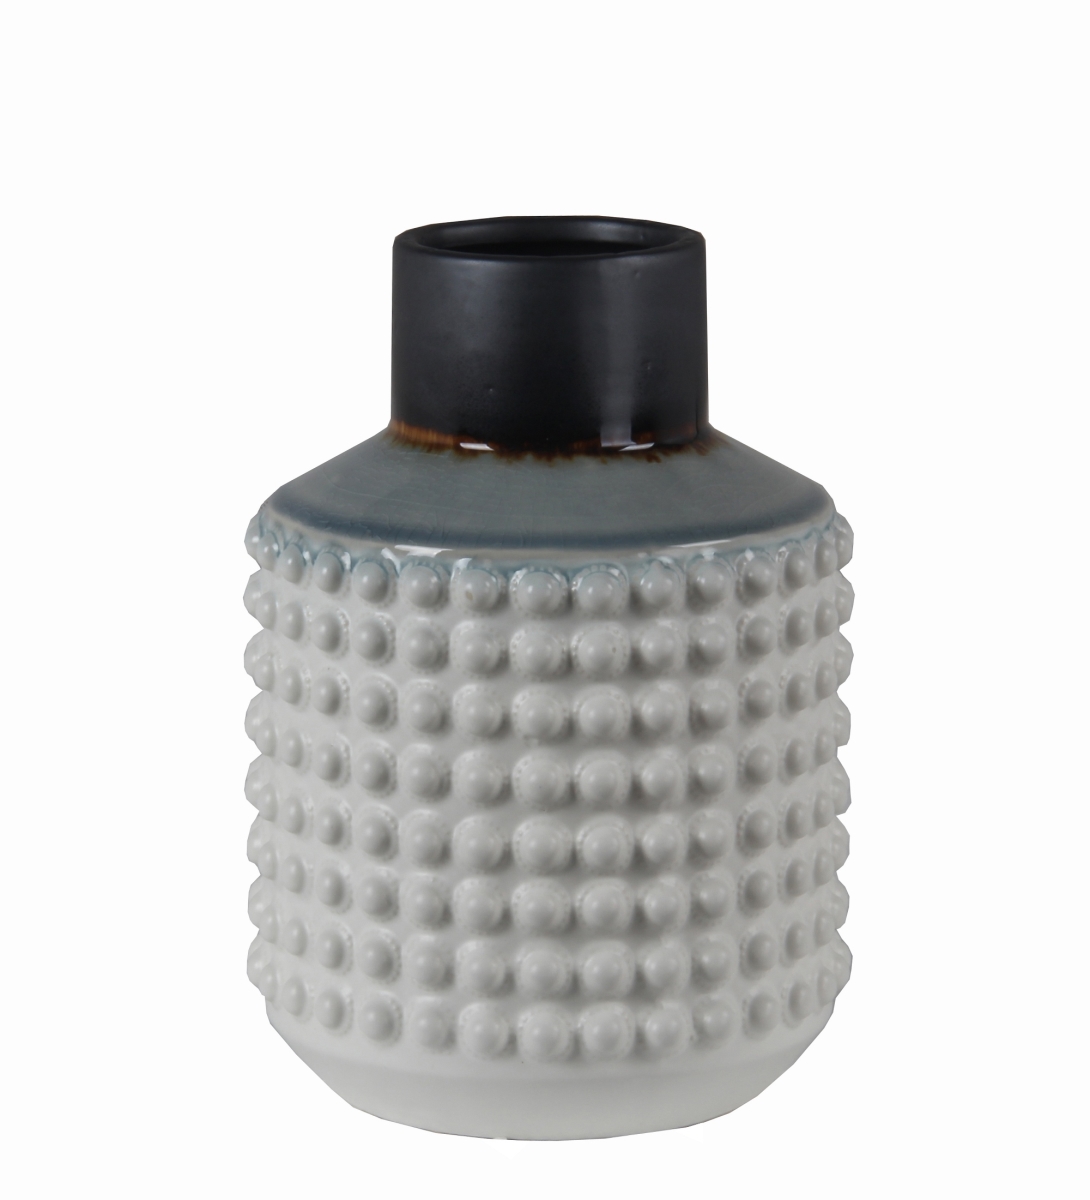 78173 Ceramic Vase, White - Small